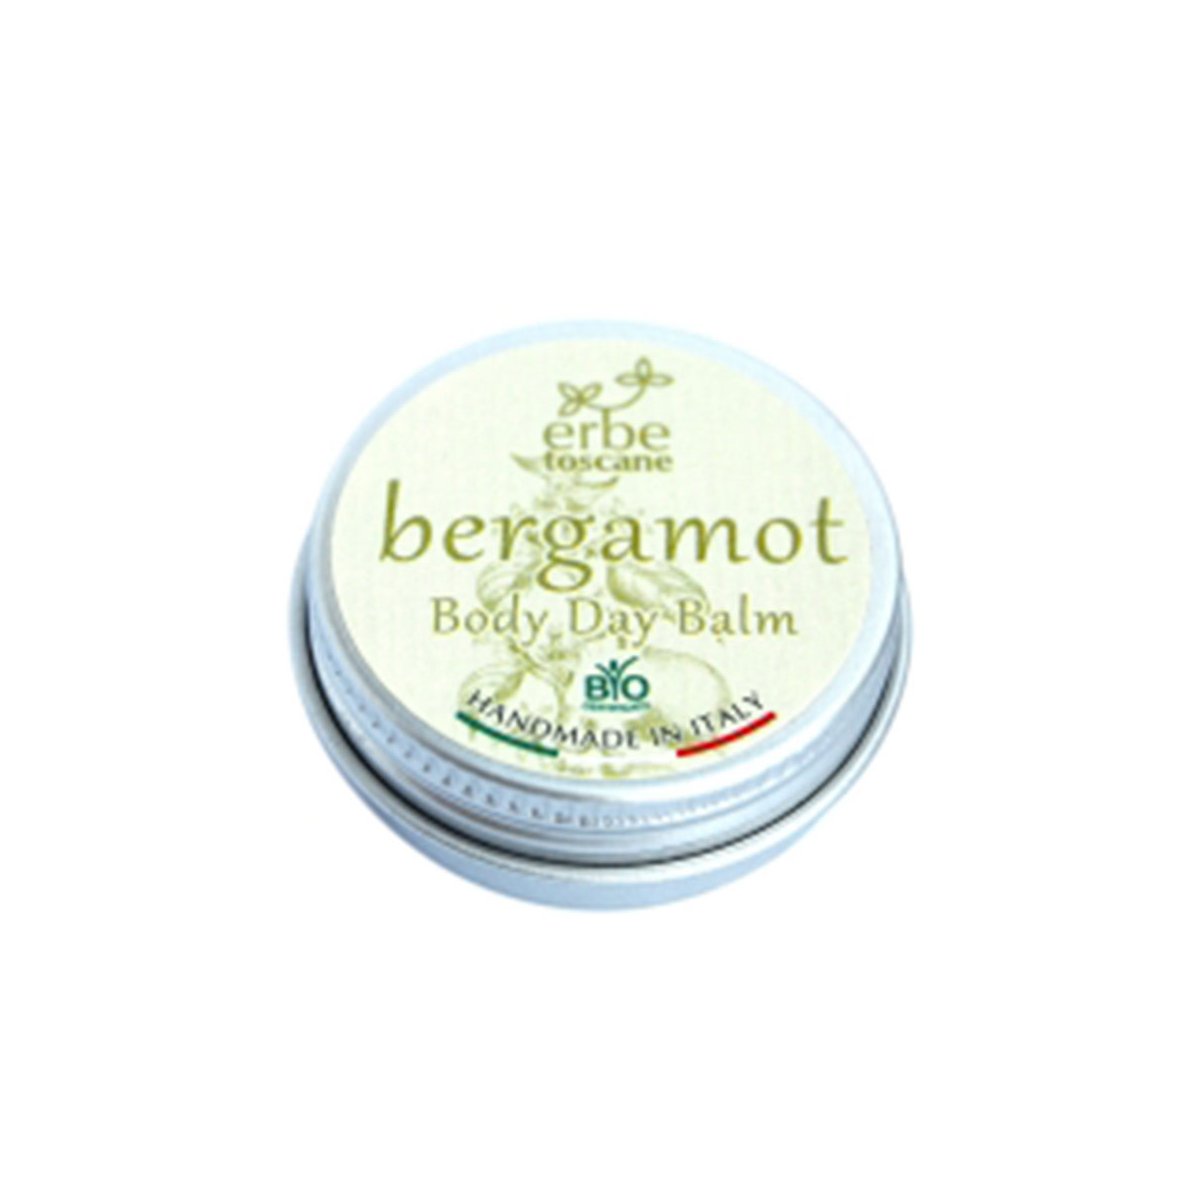 Bergamot - Body Day Balm